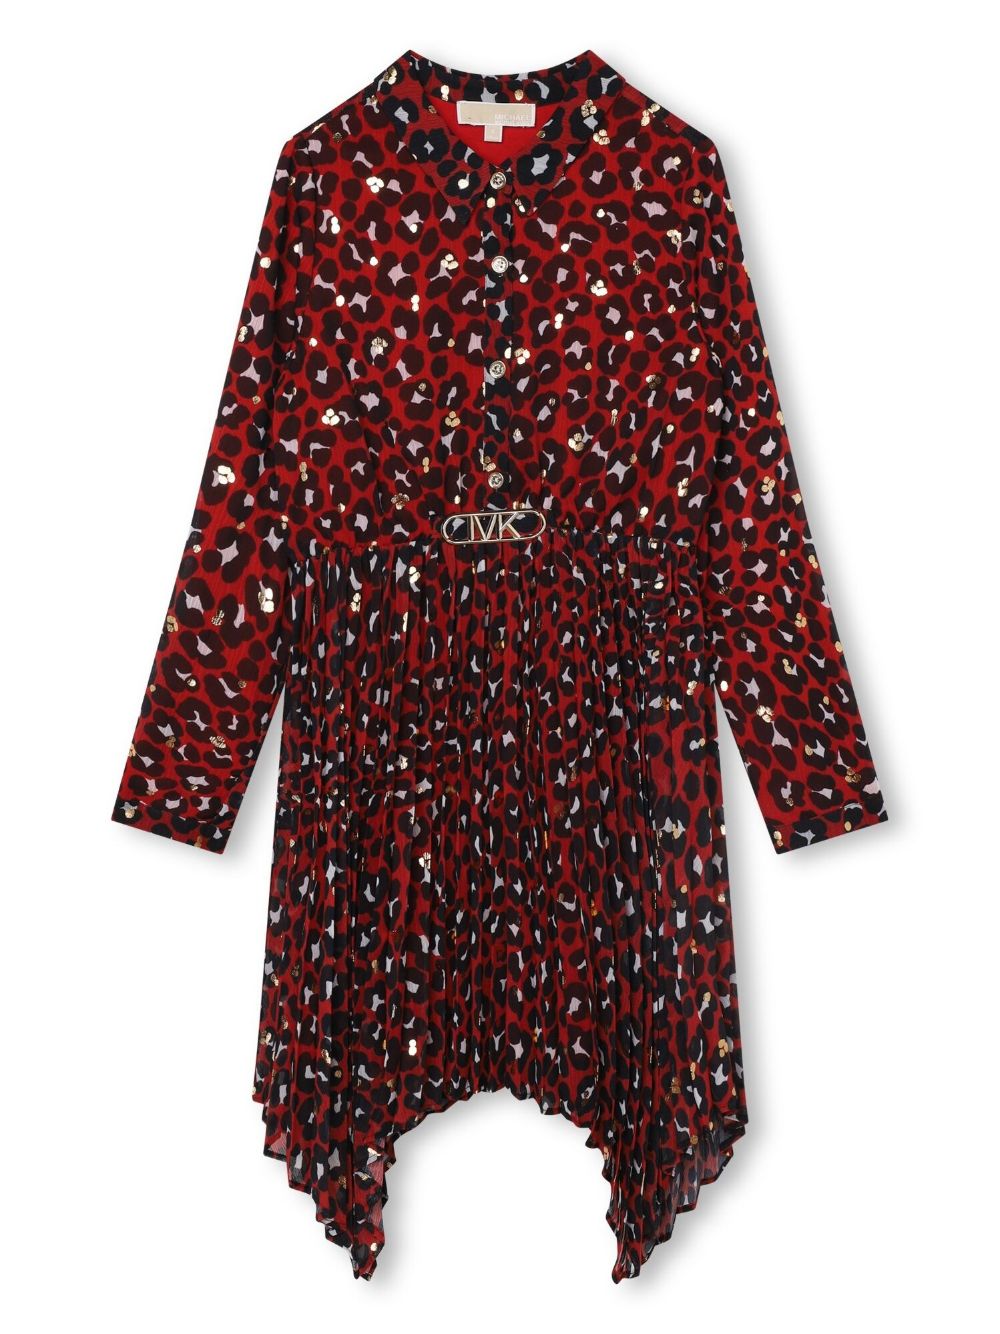 Michael Kors Kids MK Empire leopard-print dress - Red